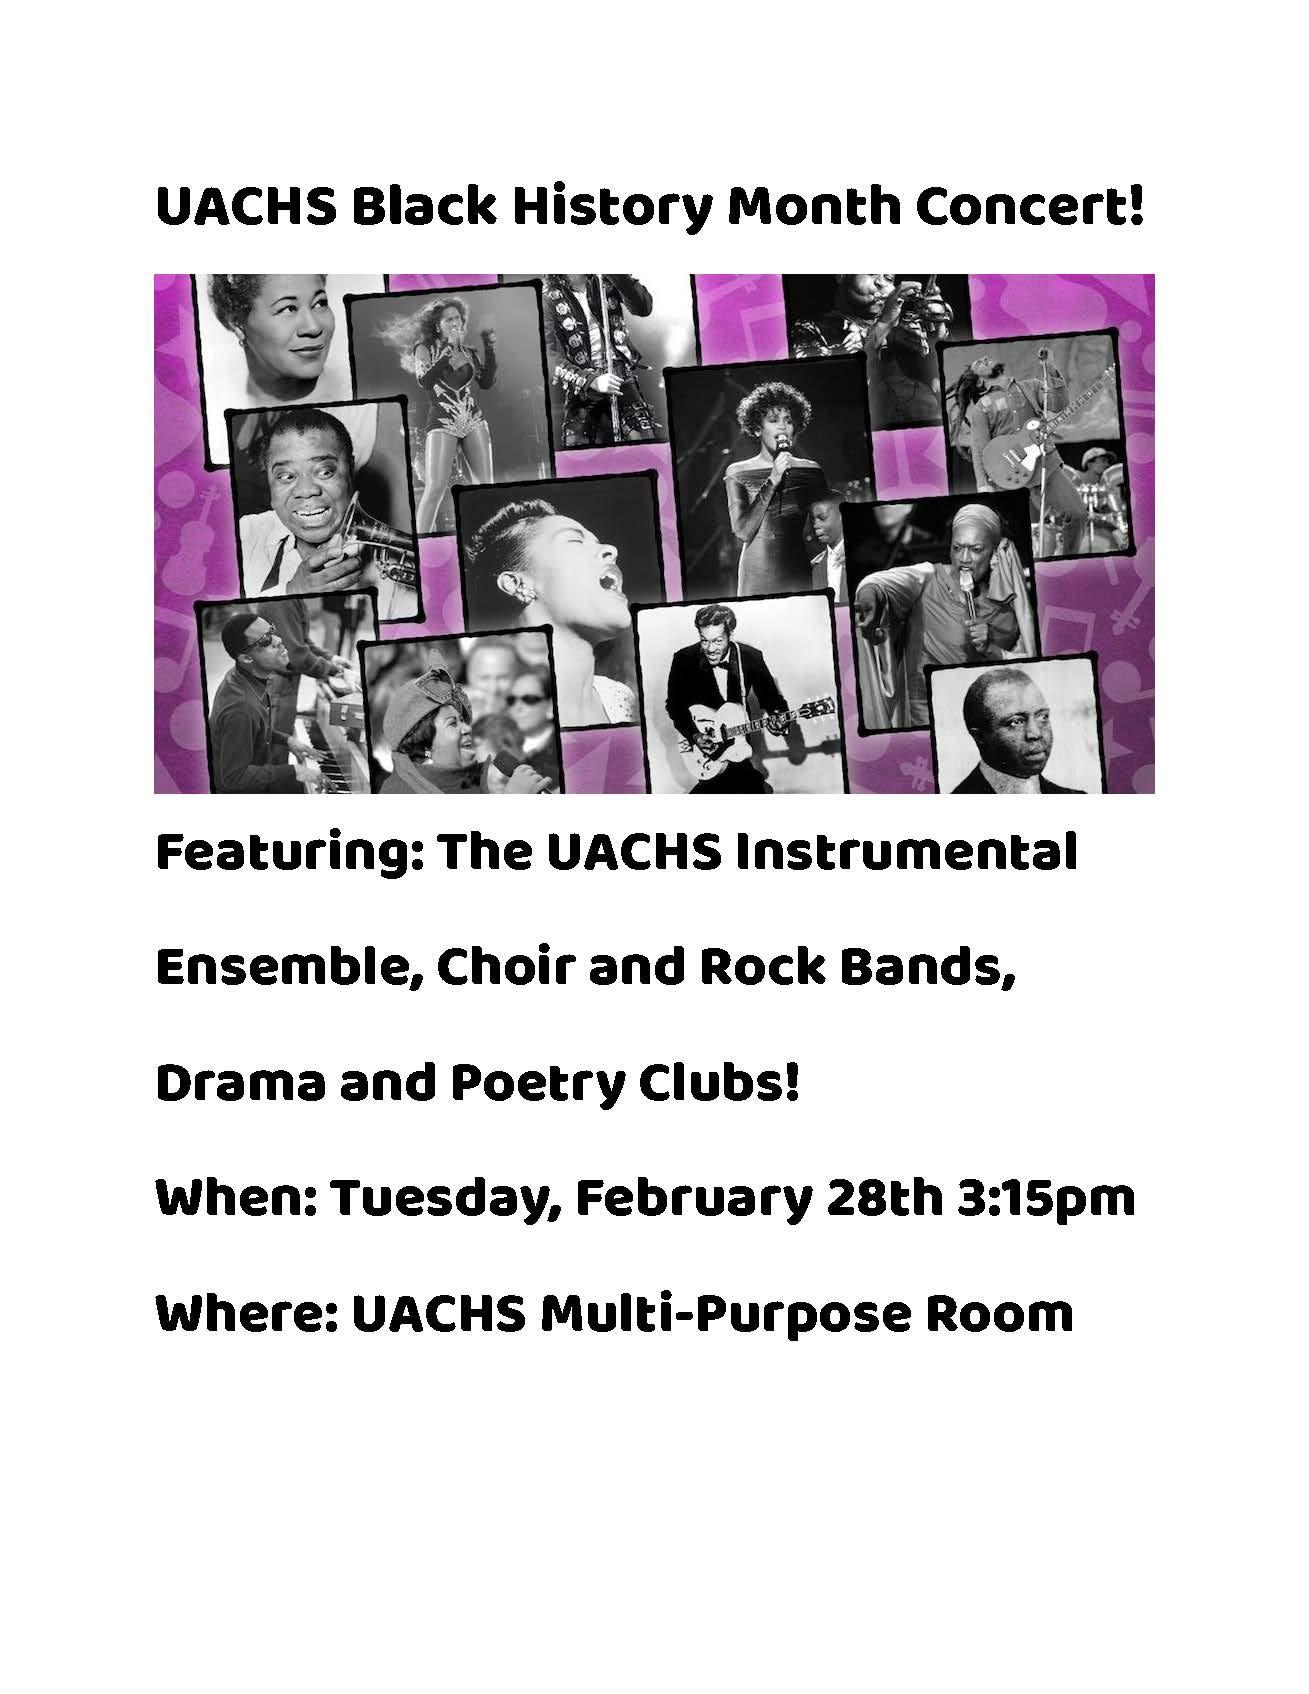 UACHS Black History Month Concert Flyer